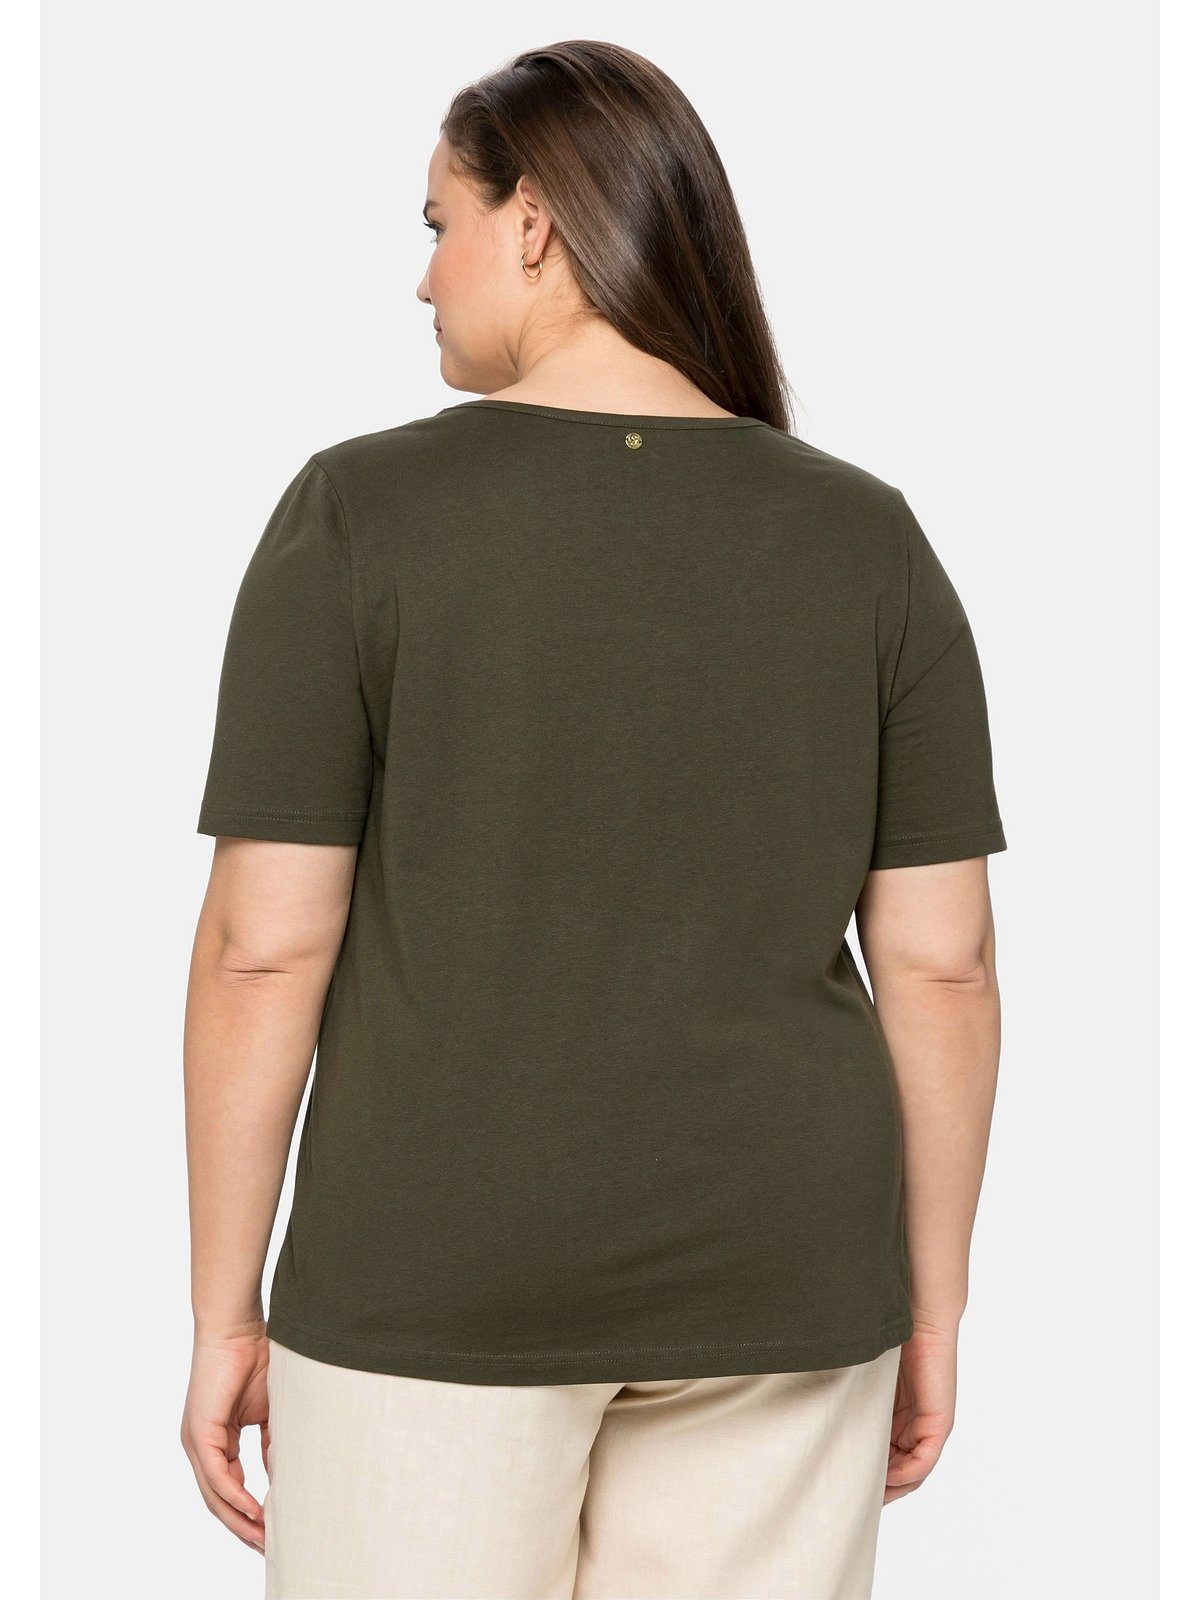 Sheego T-Shirt Große Größen mit schimmerndem Pailletten-Schriftzug | V-Shirts